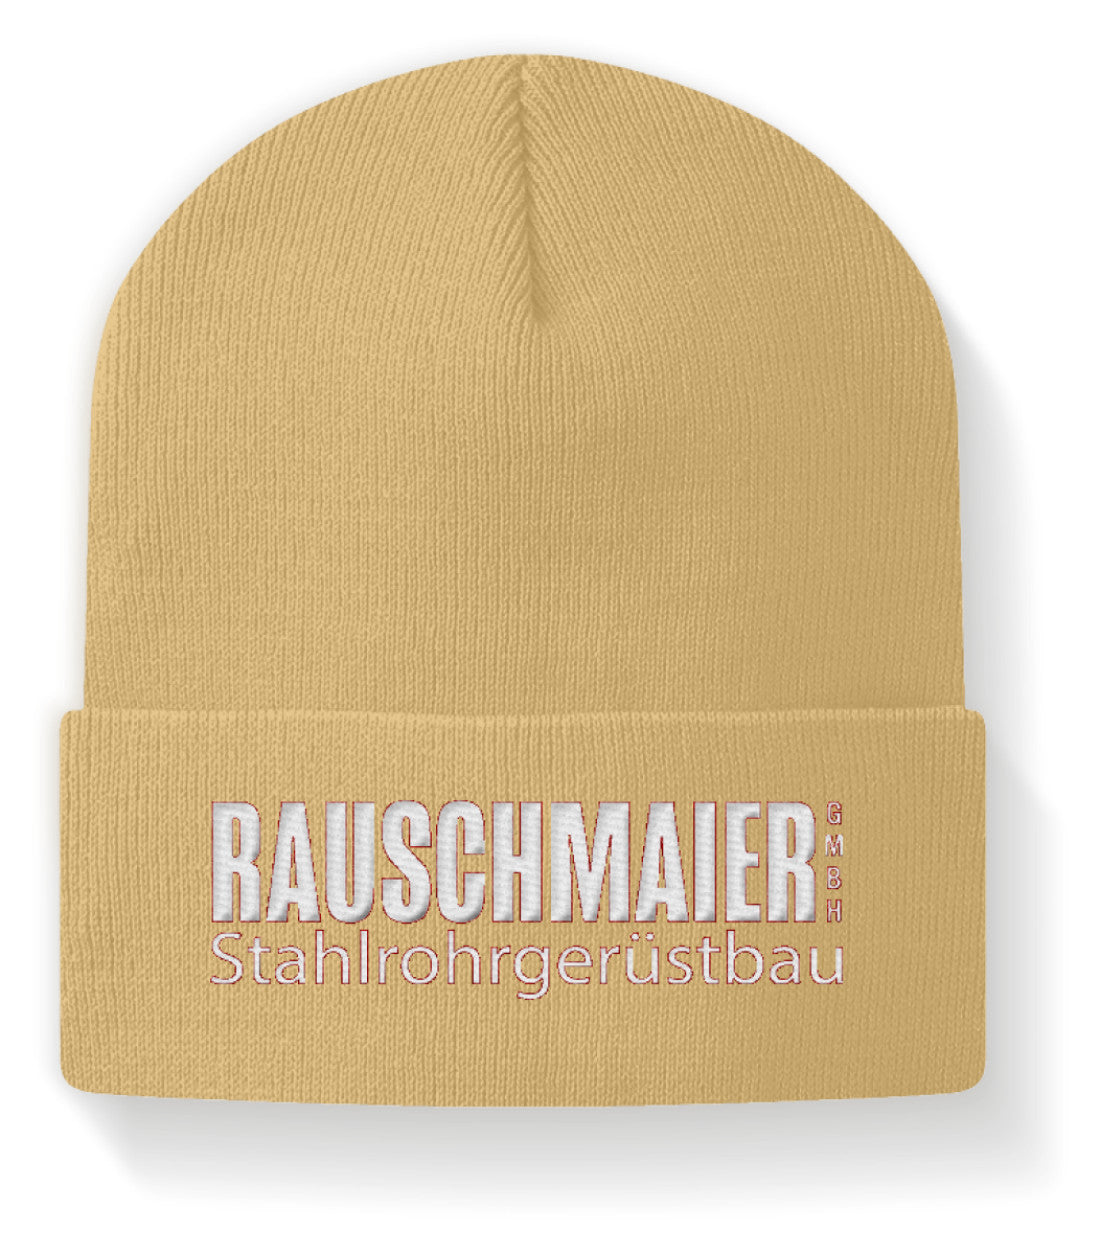 Gerüstbau Rauschmaier  - Beanie €24.95 Gerüstbauer - Shop >>